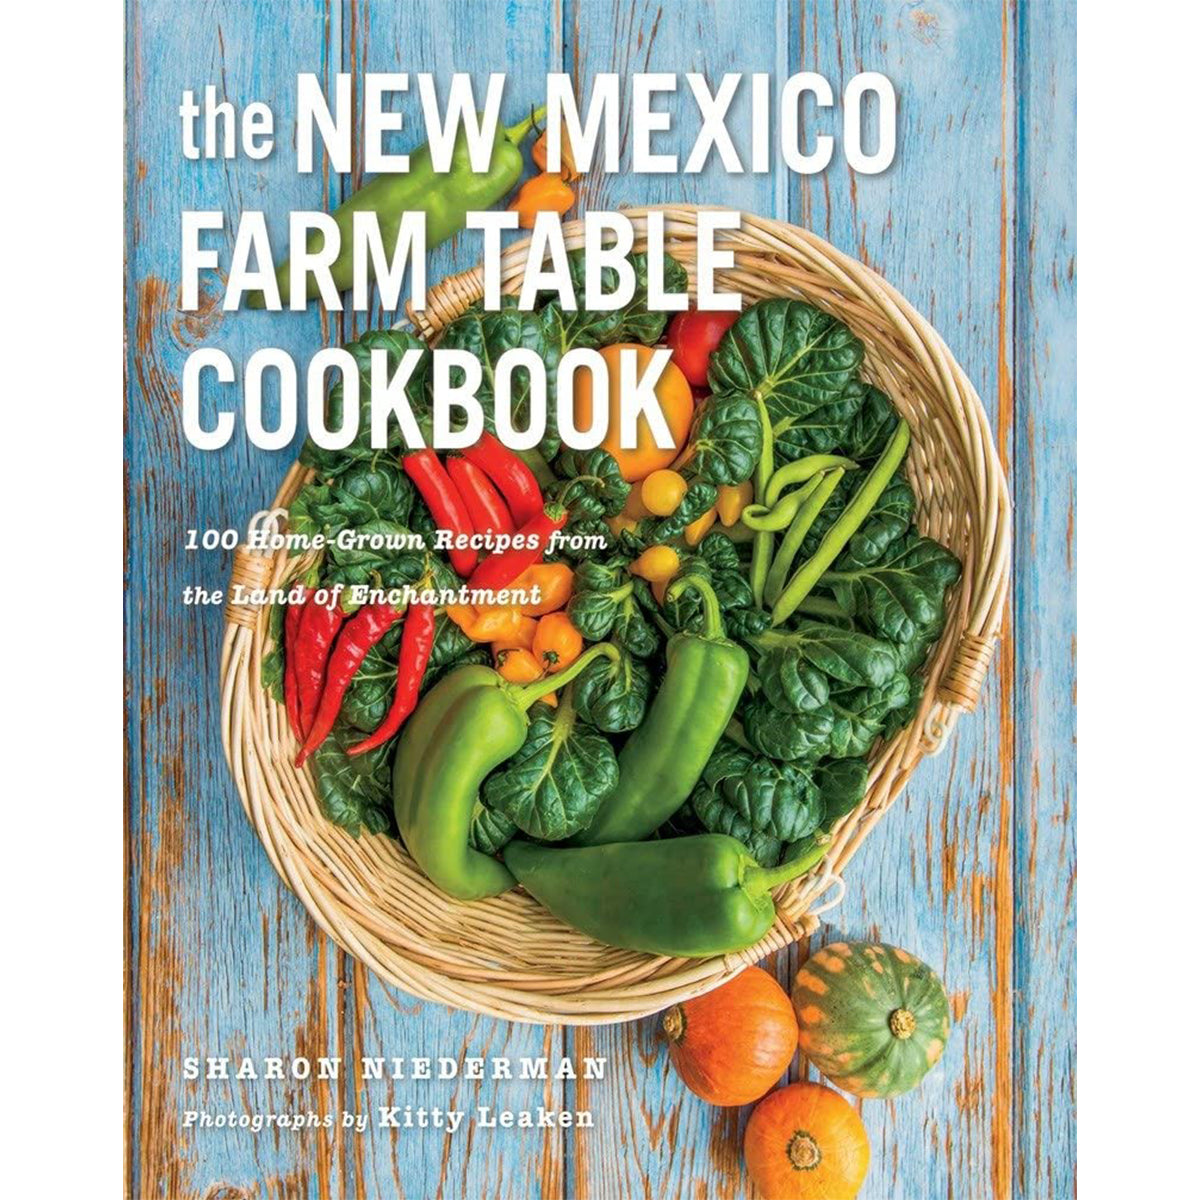 The New Mexico Farm Table Cookbook